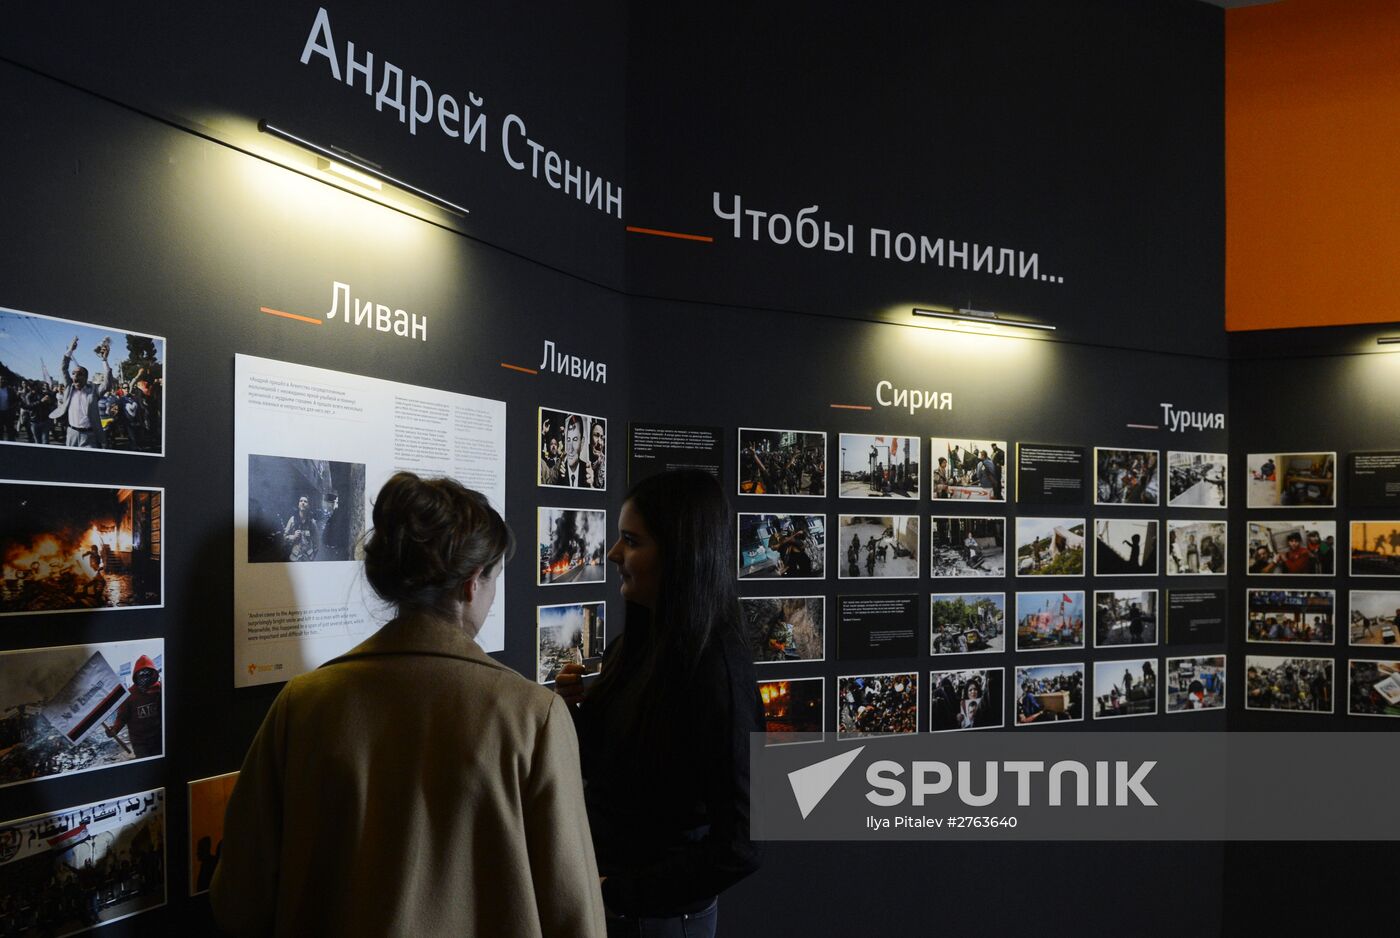 Exhibition of Andrei Stenin's photos opens